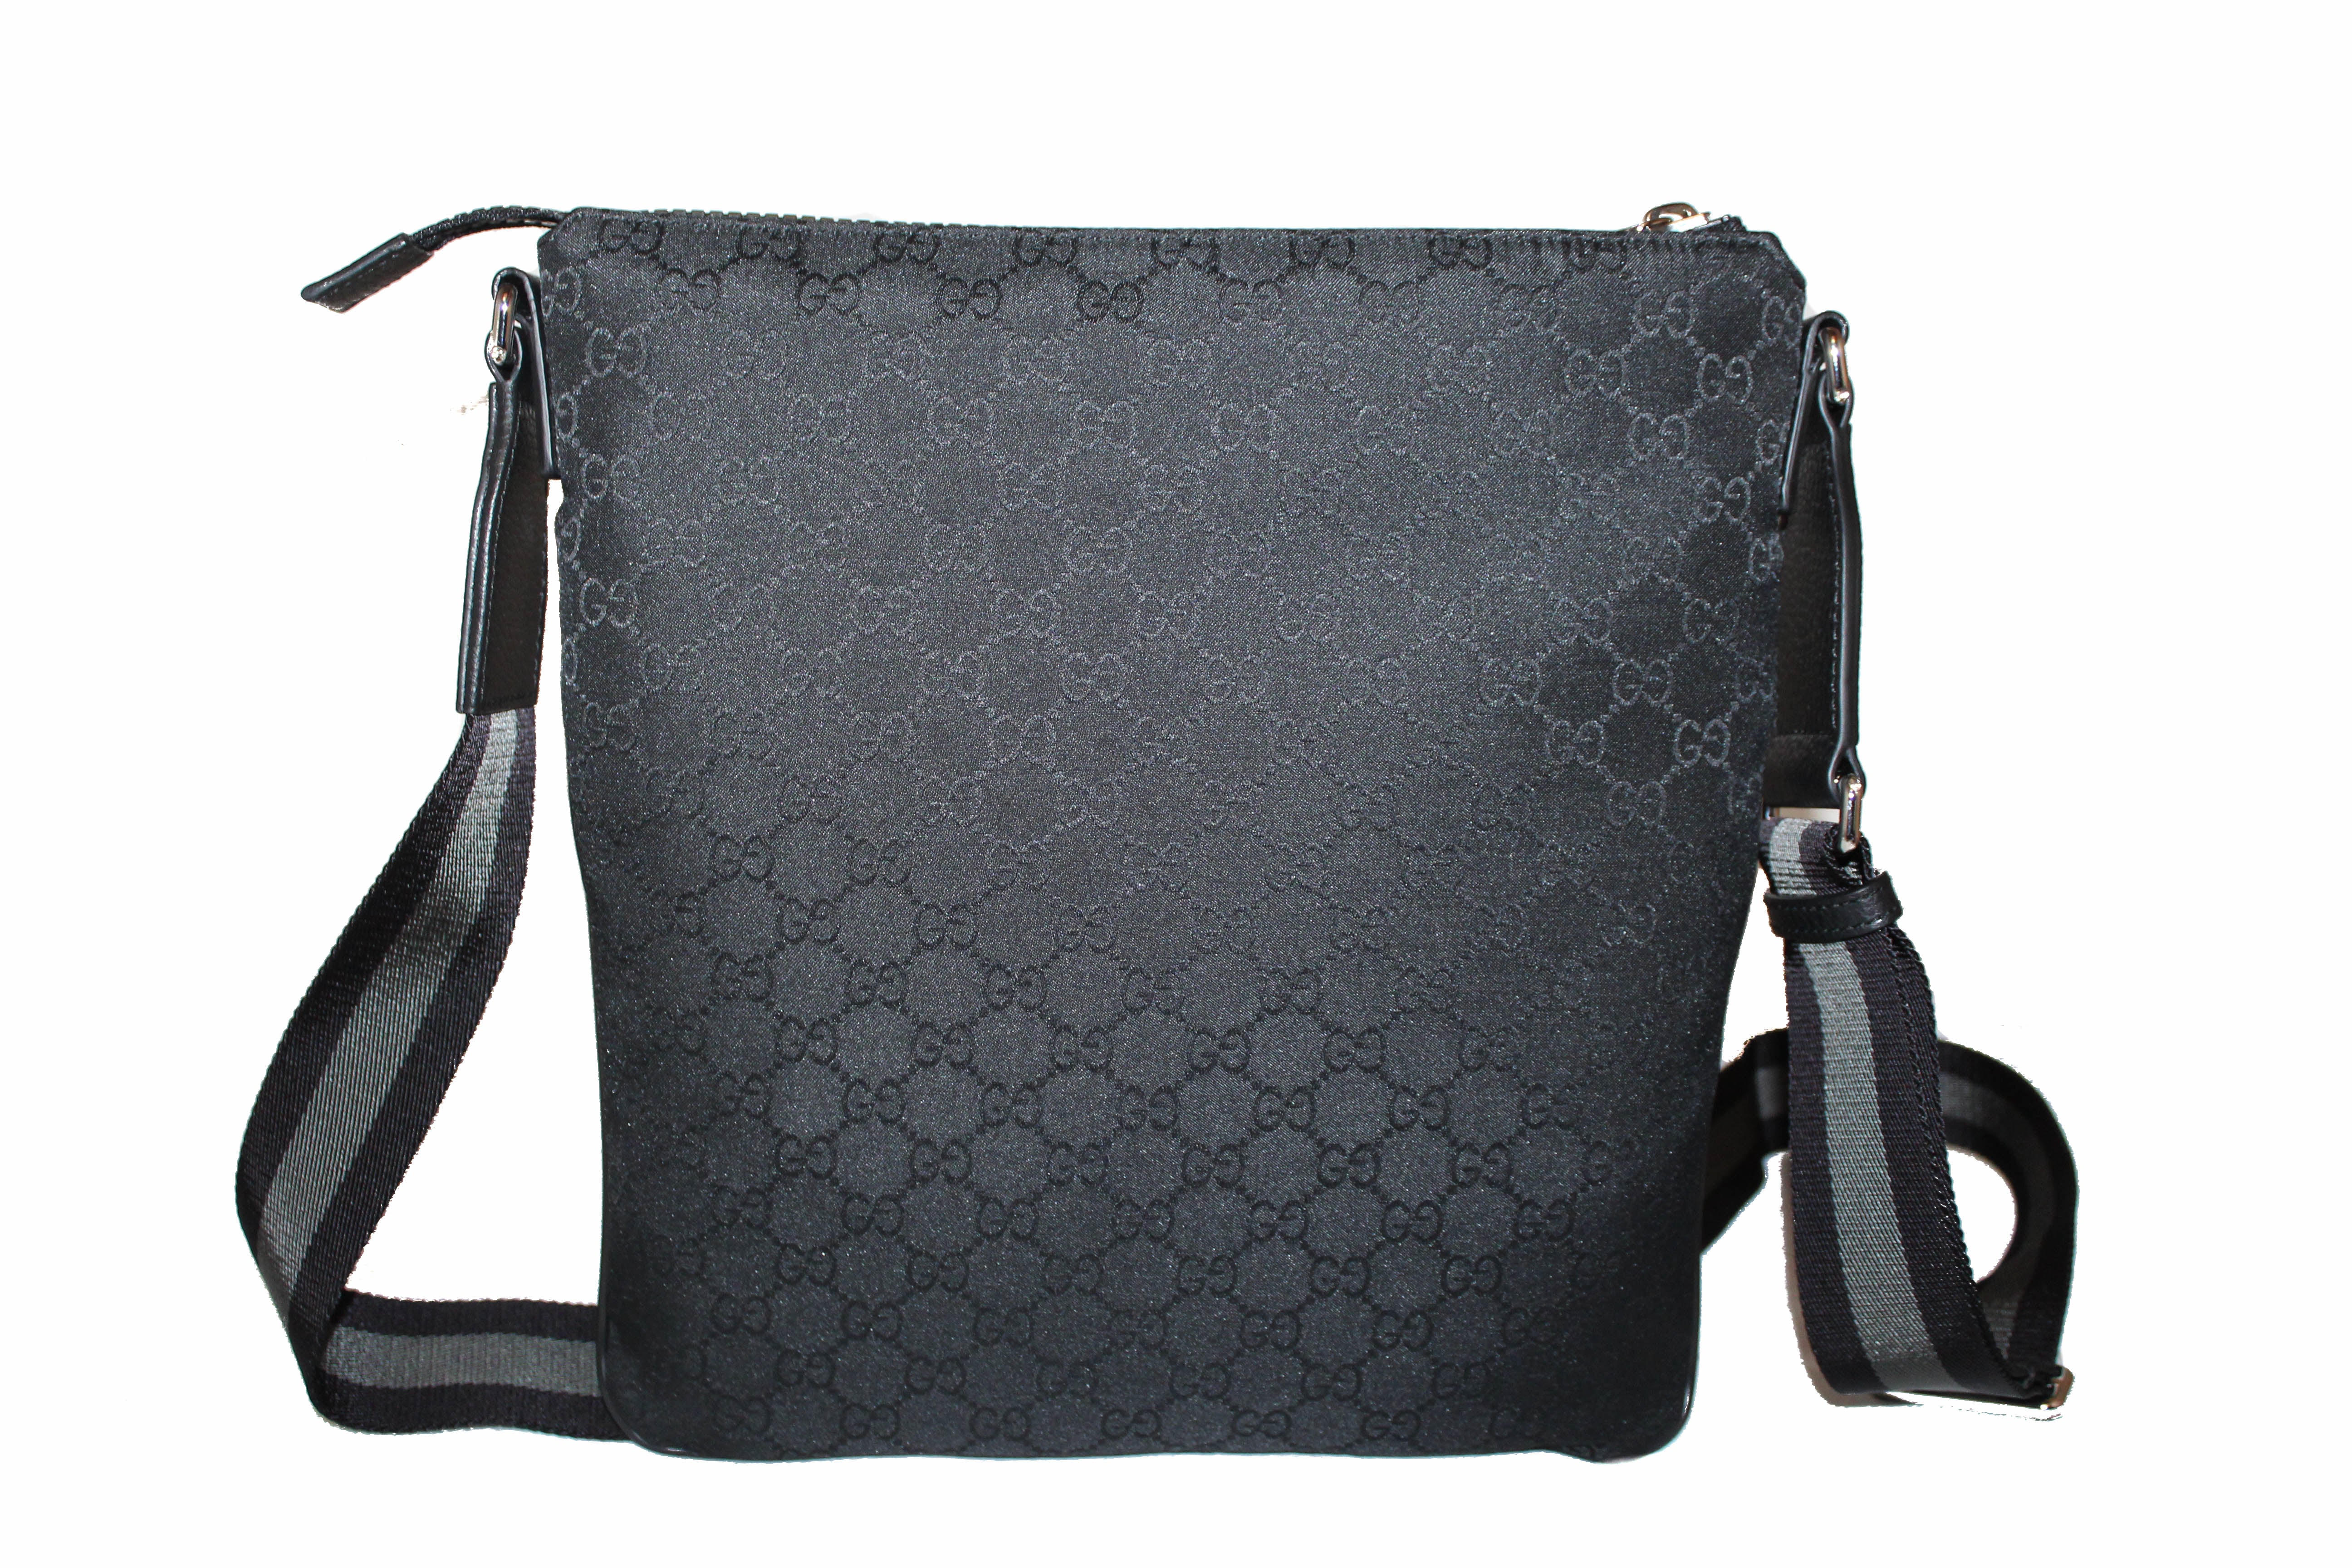 Black GG-monogram canvas cross-body bag, Gucci